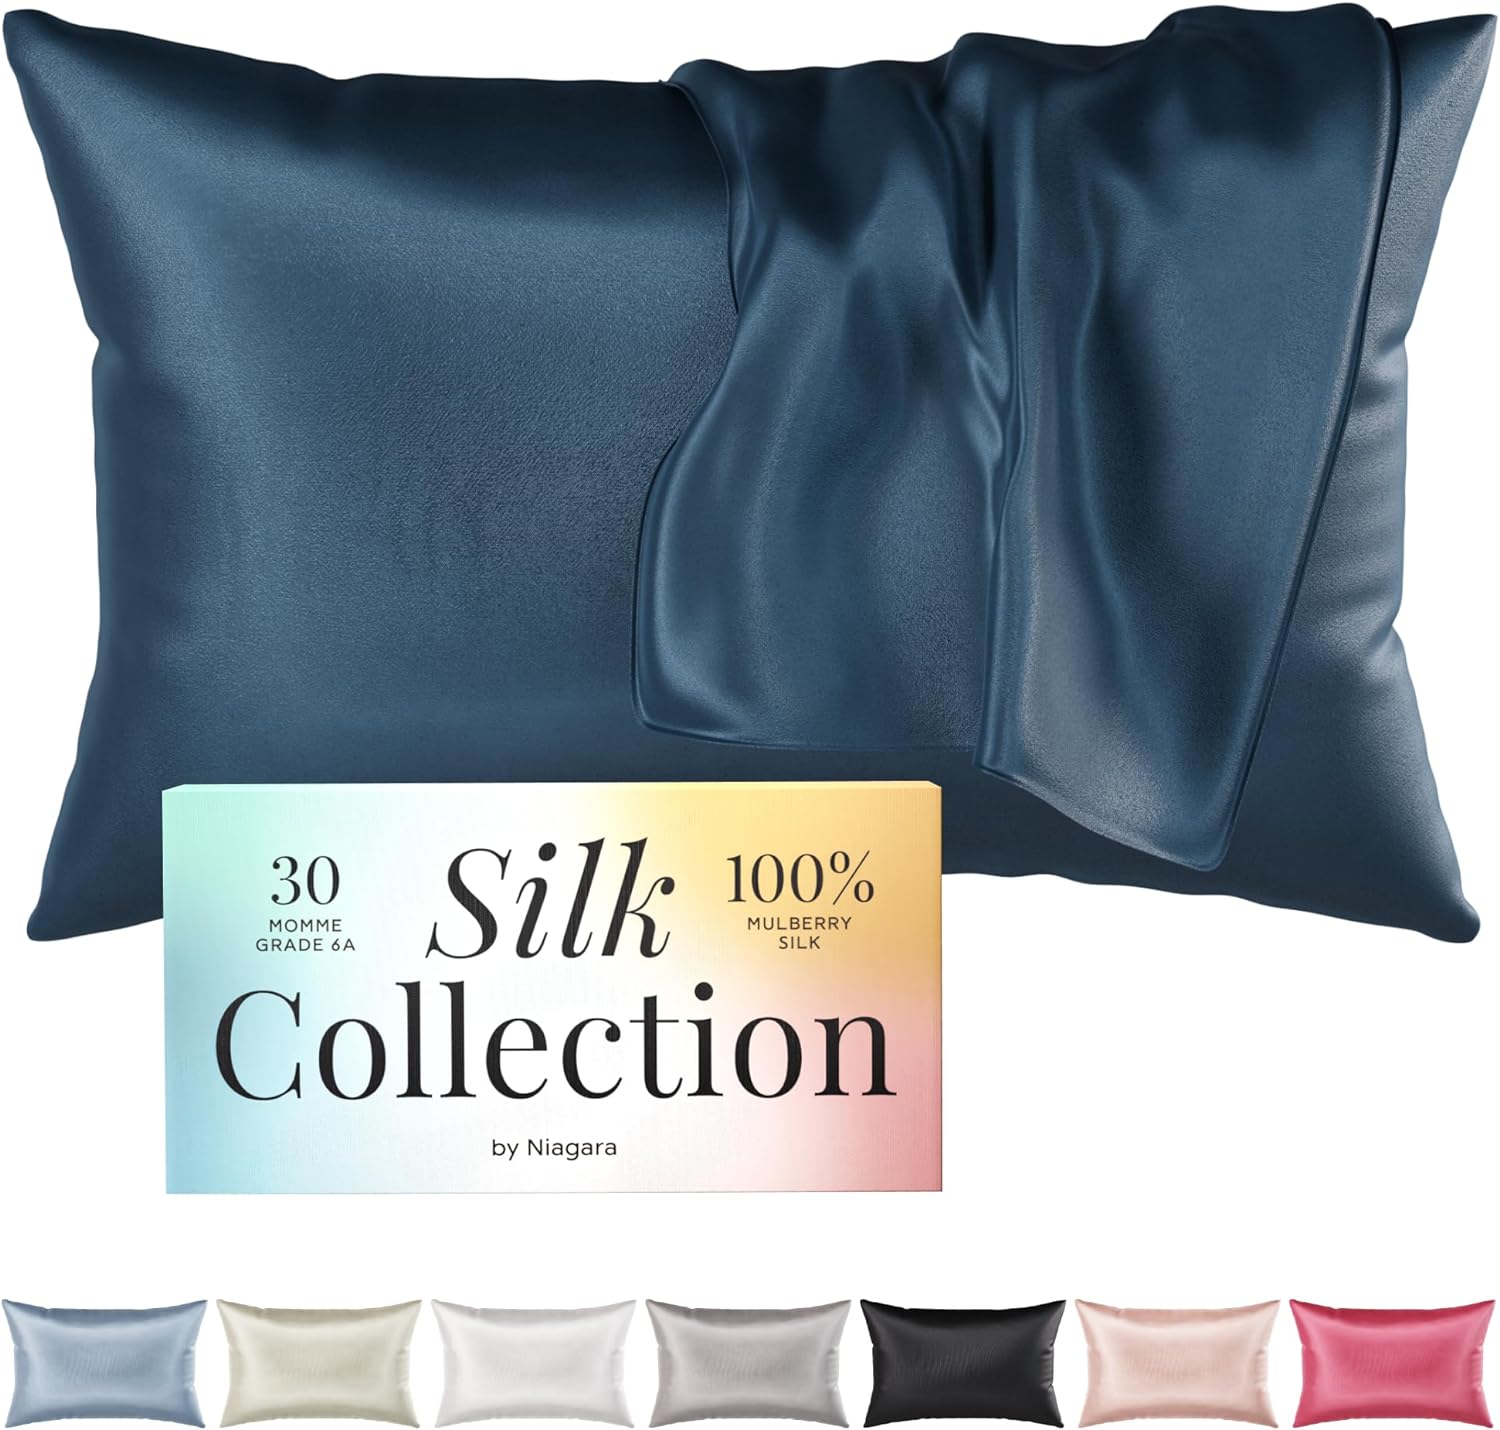 Niagara 100% Mulberry Silk Pillowcase - 30 Momme Silk Pillow case for Hair and Skin - Grade 6A Silk Pillow Cases with Zipper - Soft & Cooling Navy Blue Silk Pillowcase Queen Size (20x30)